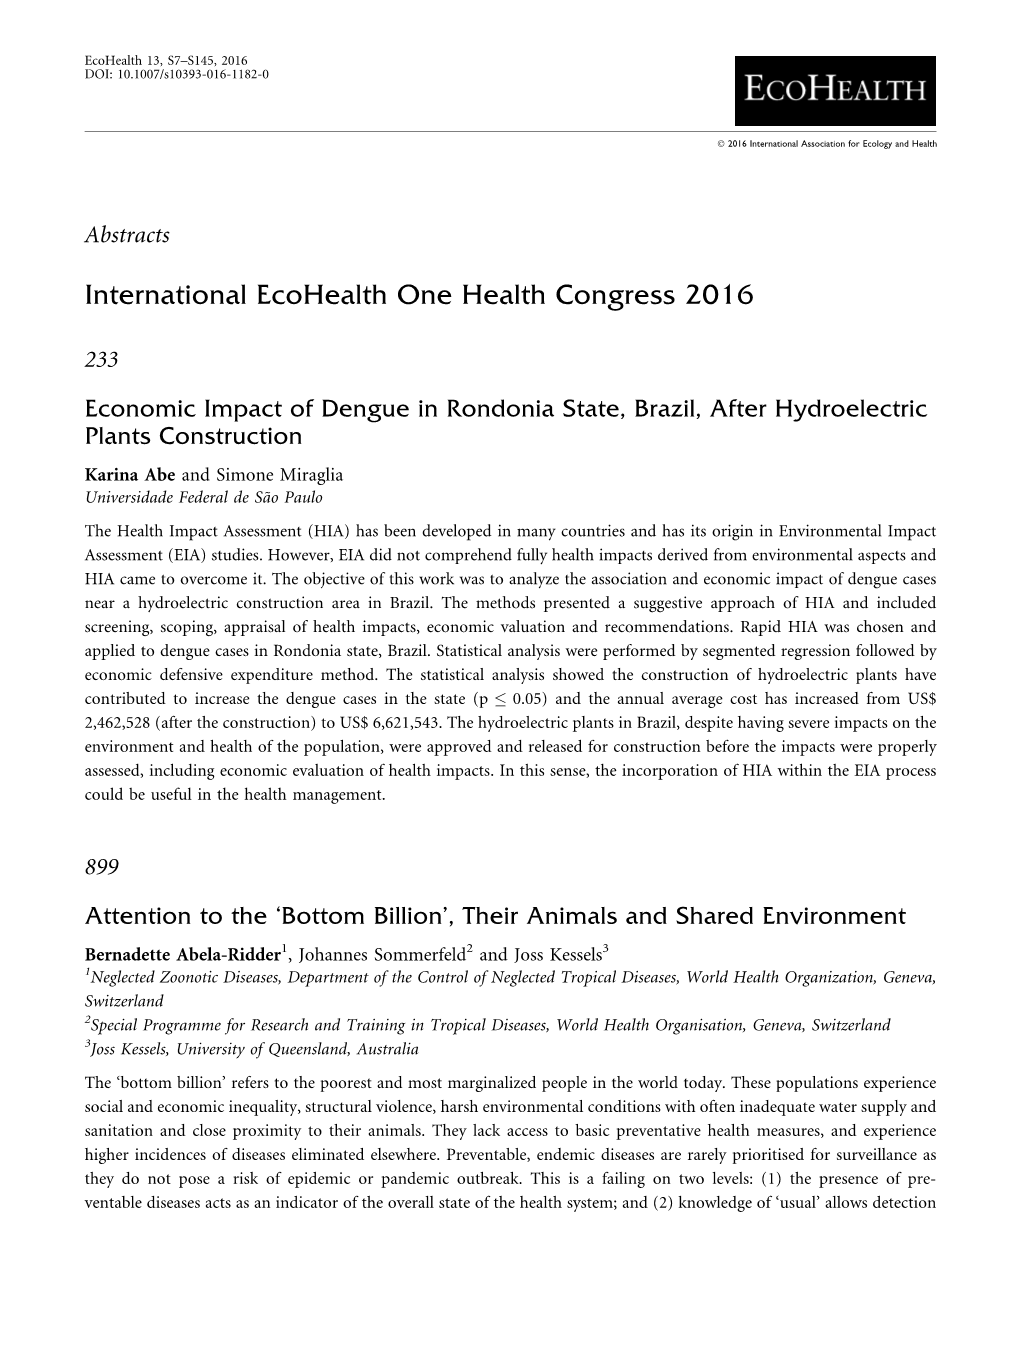 International Ecohealth One Health Congress 2016